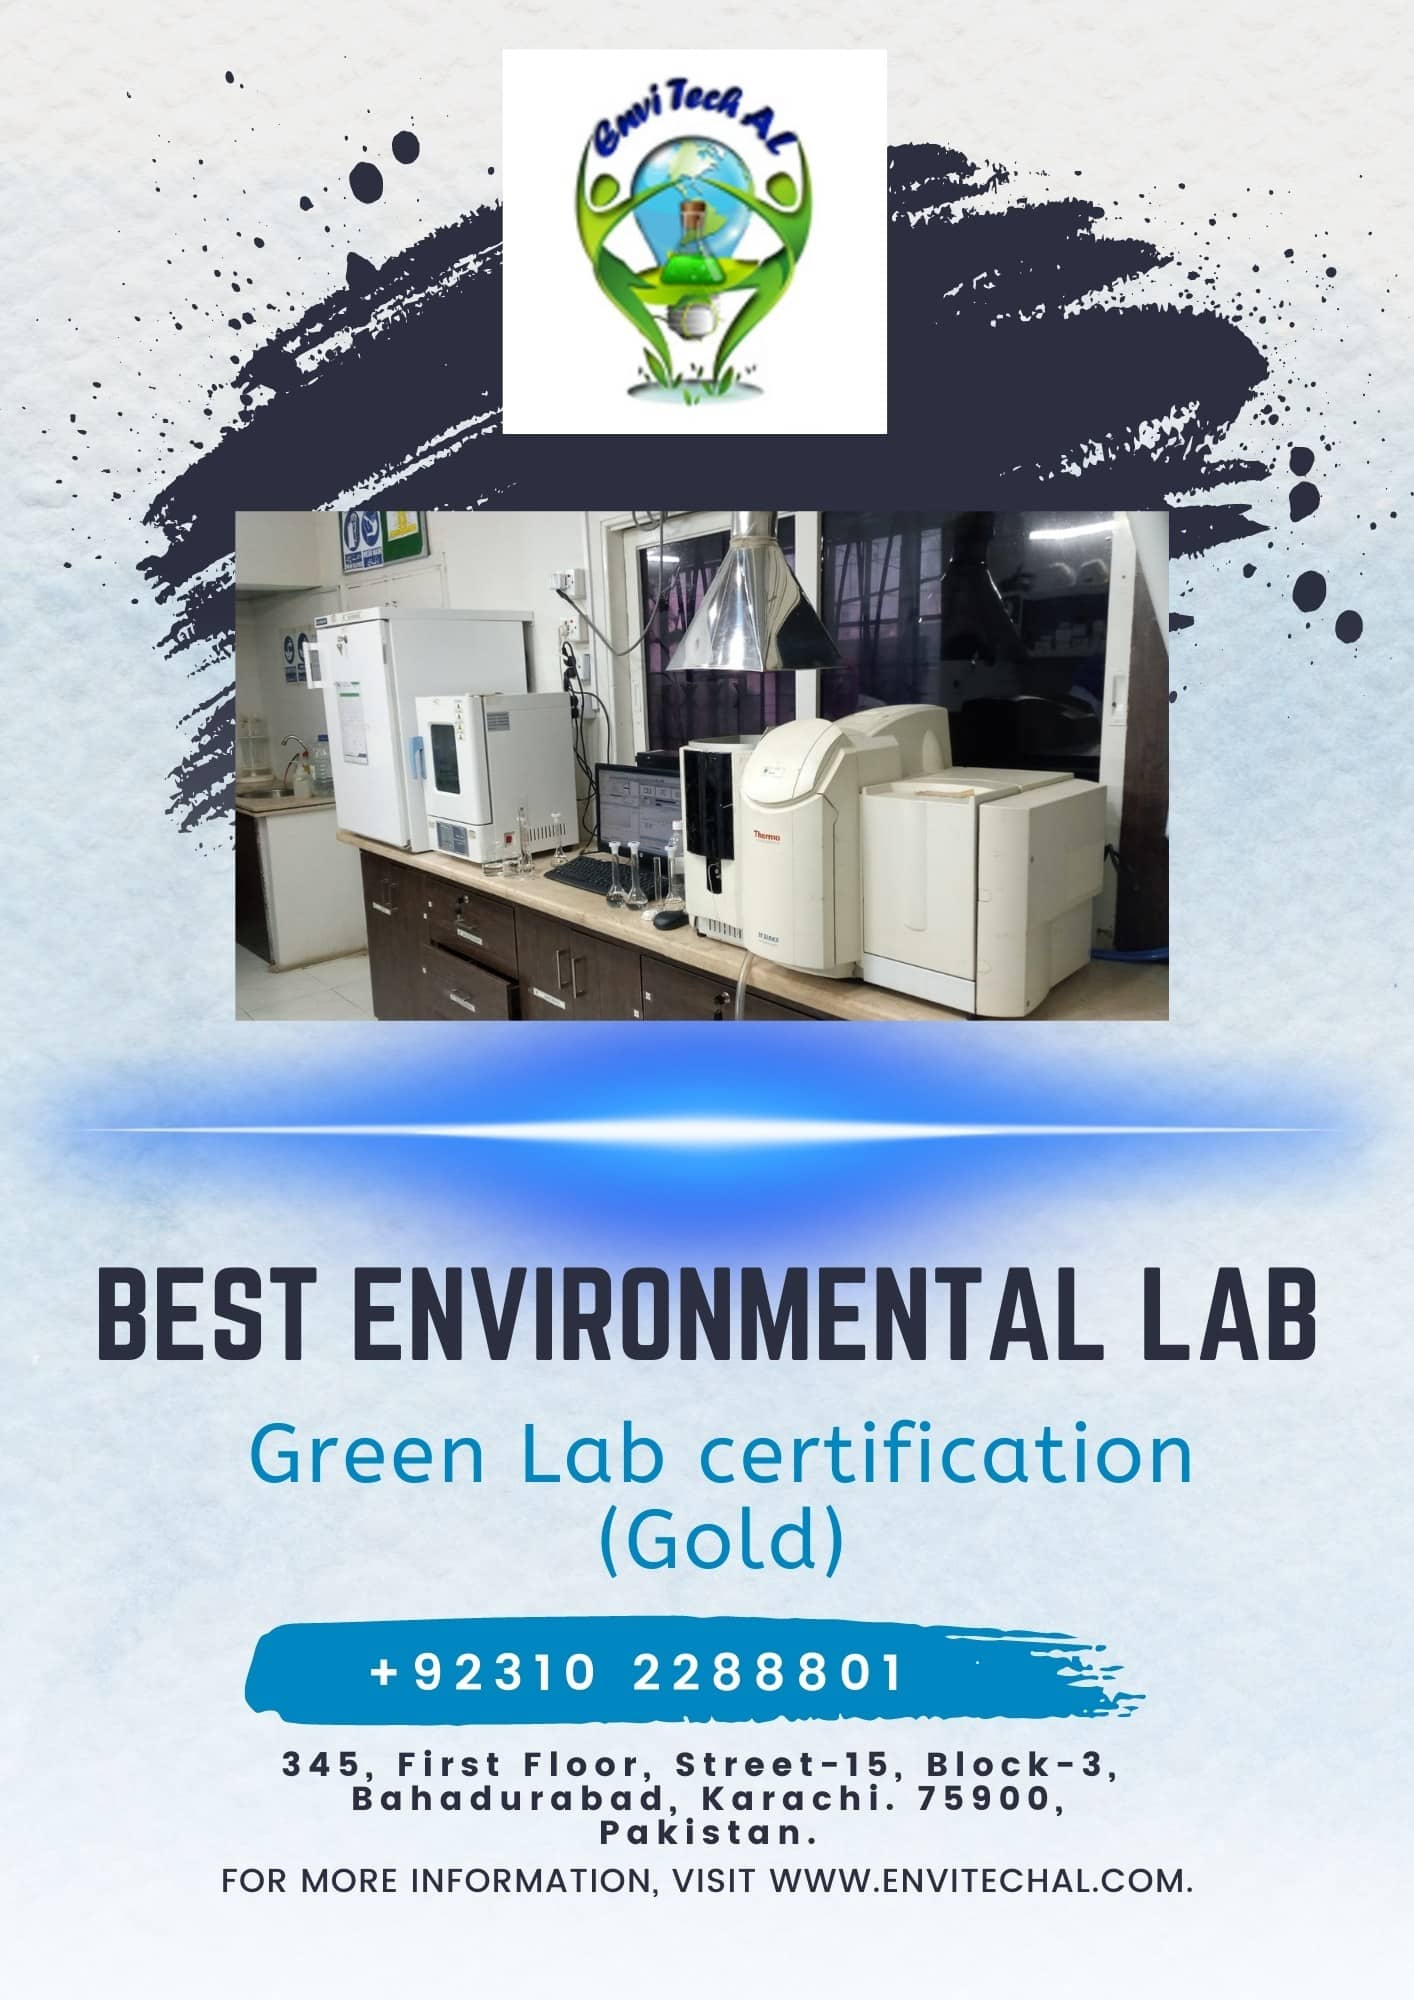 The best environmental lab karachi